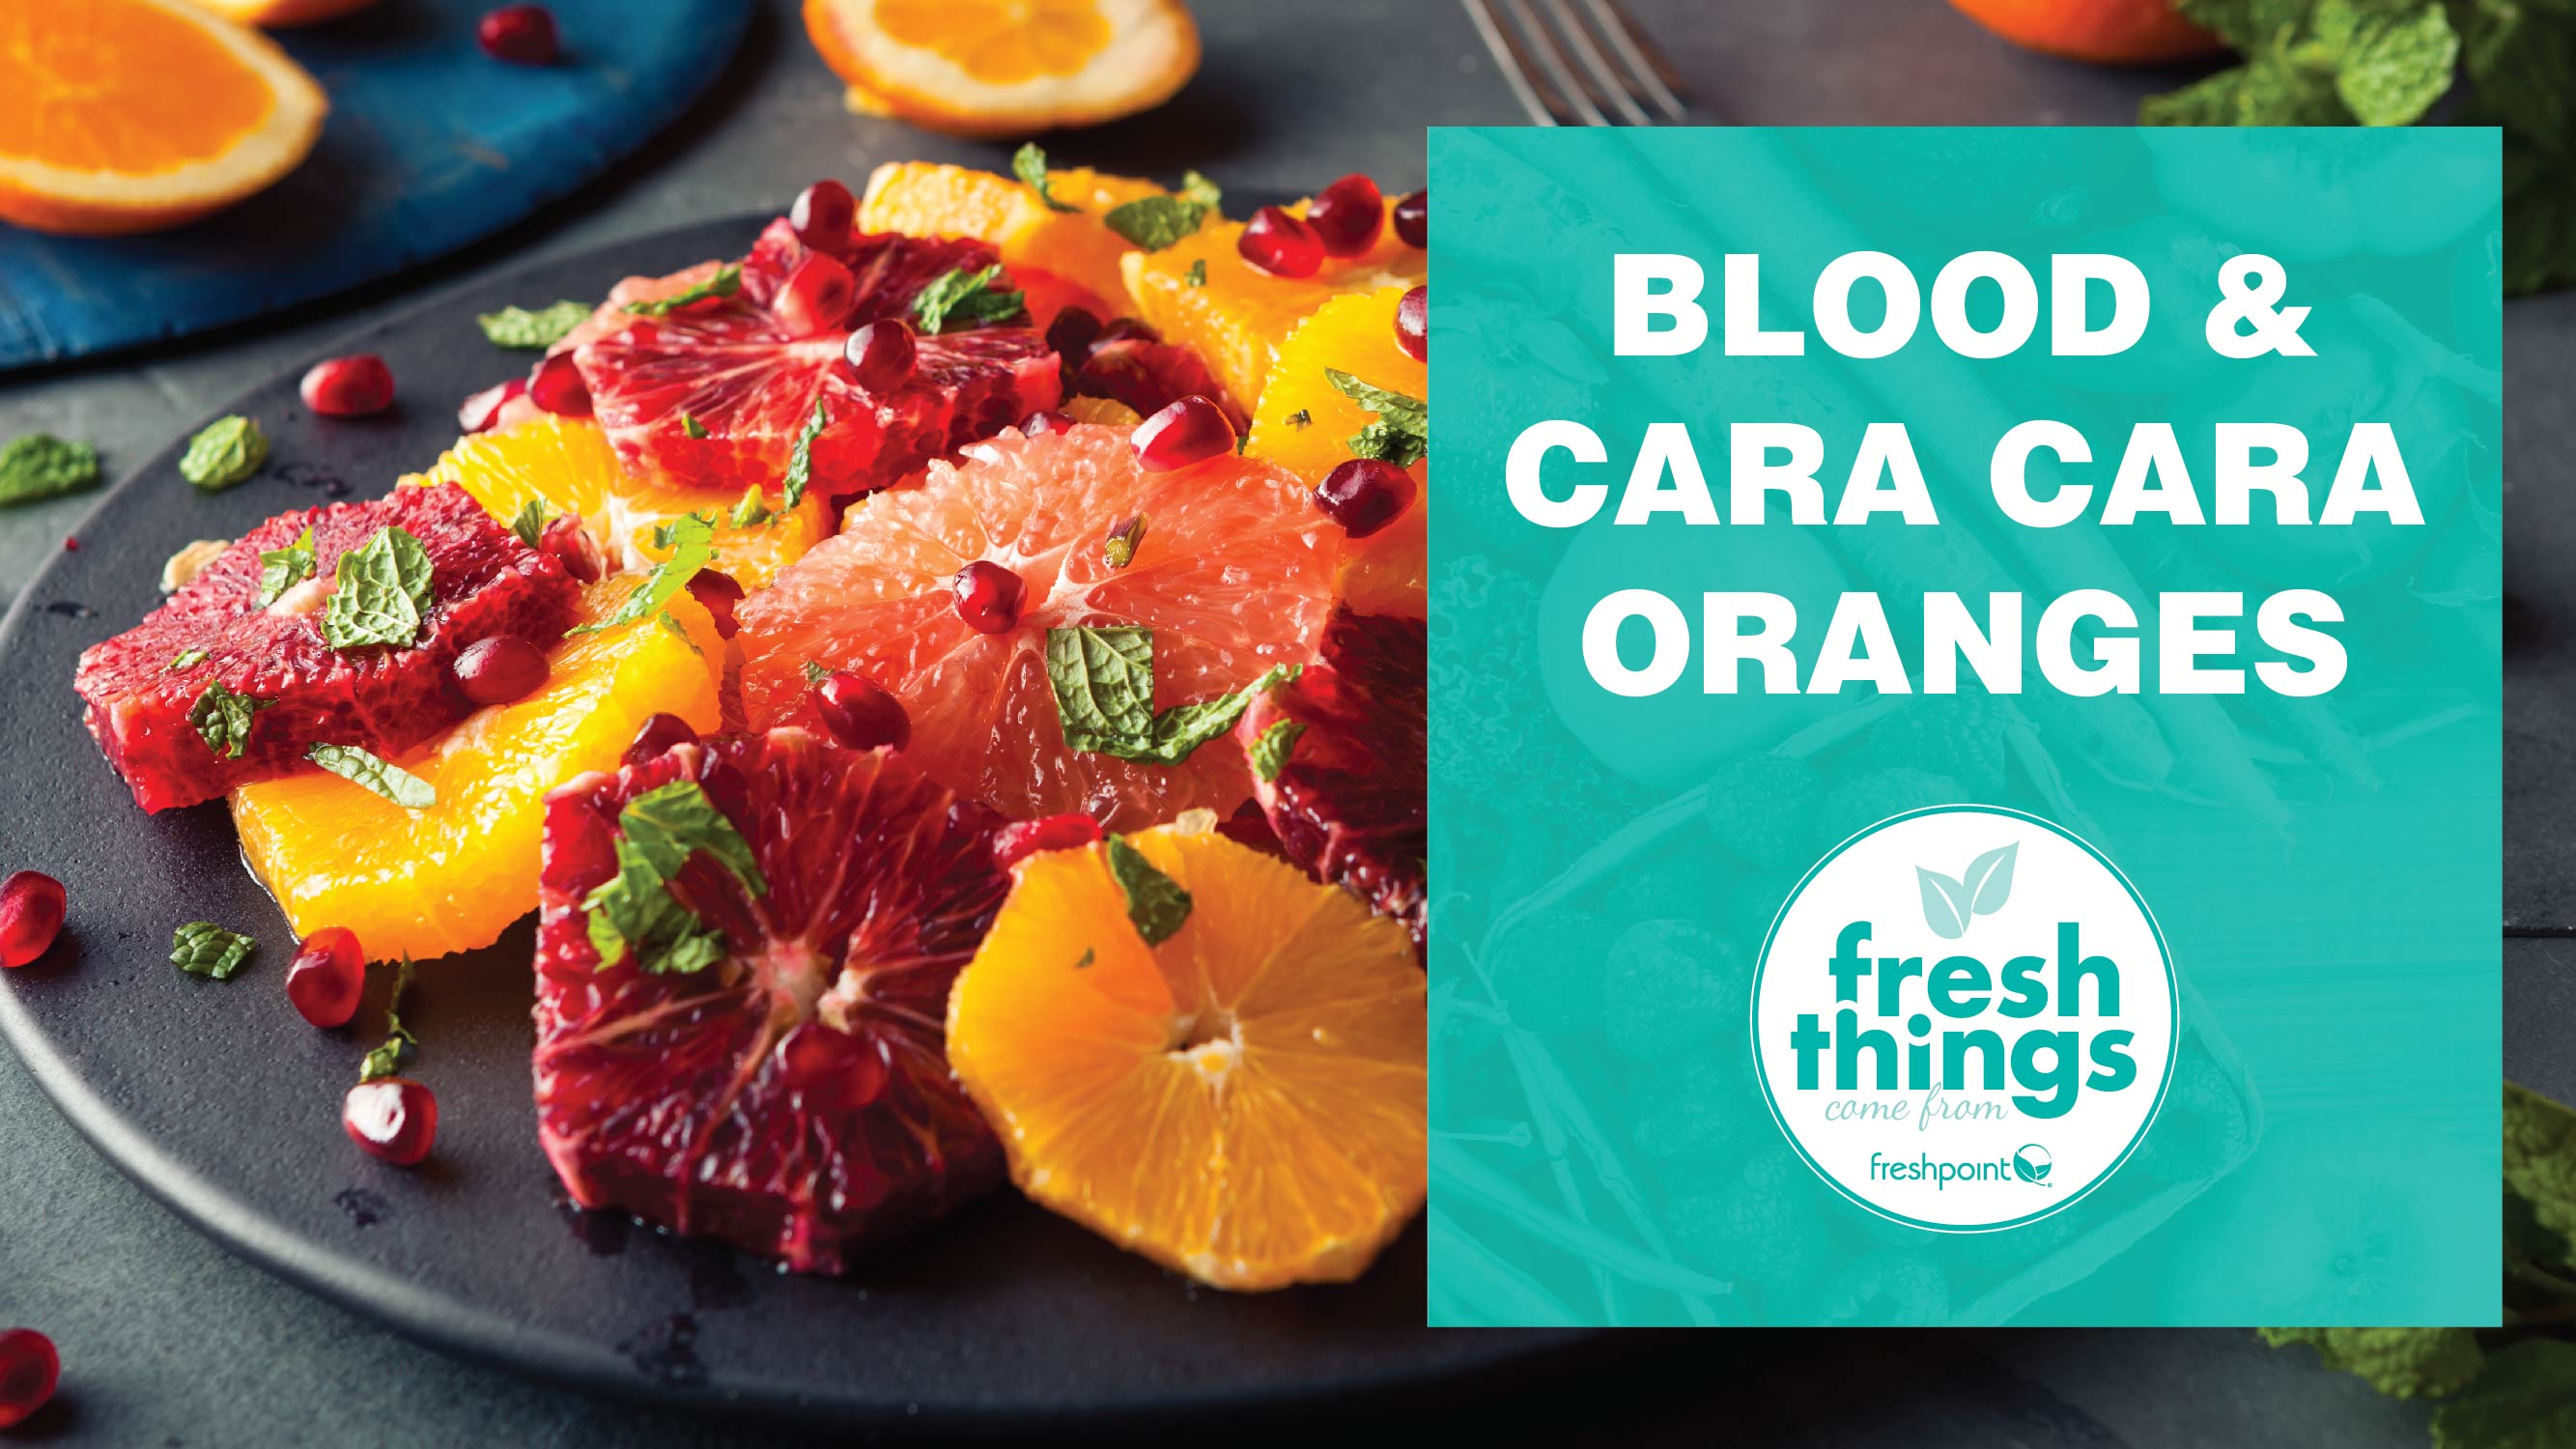 freshpoint-produce-Blood-oranges-Cara-Cara-oranges